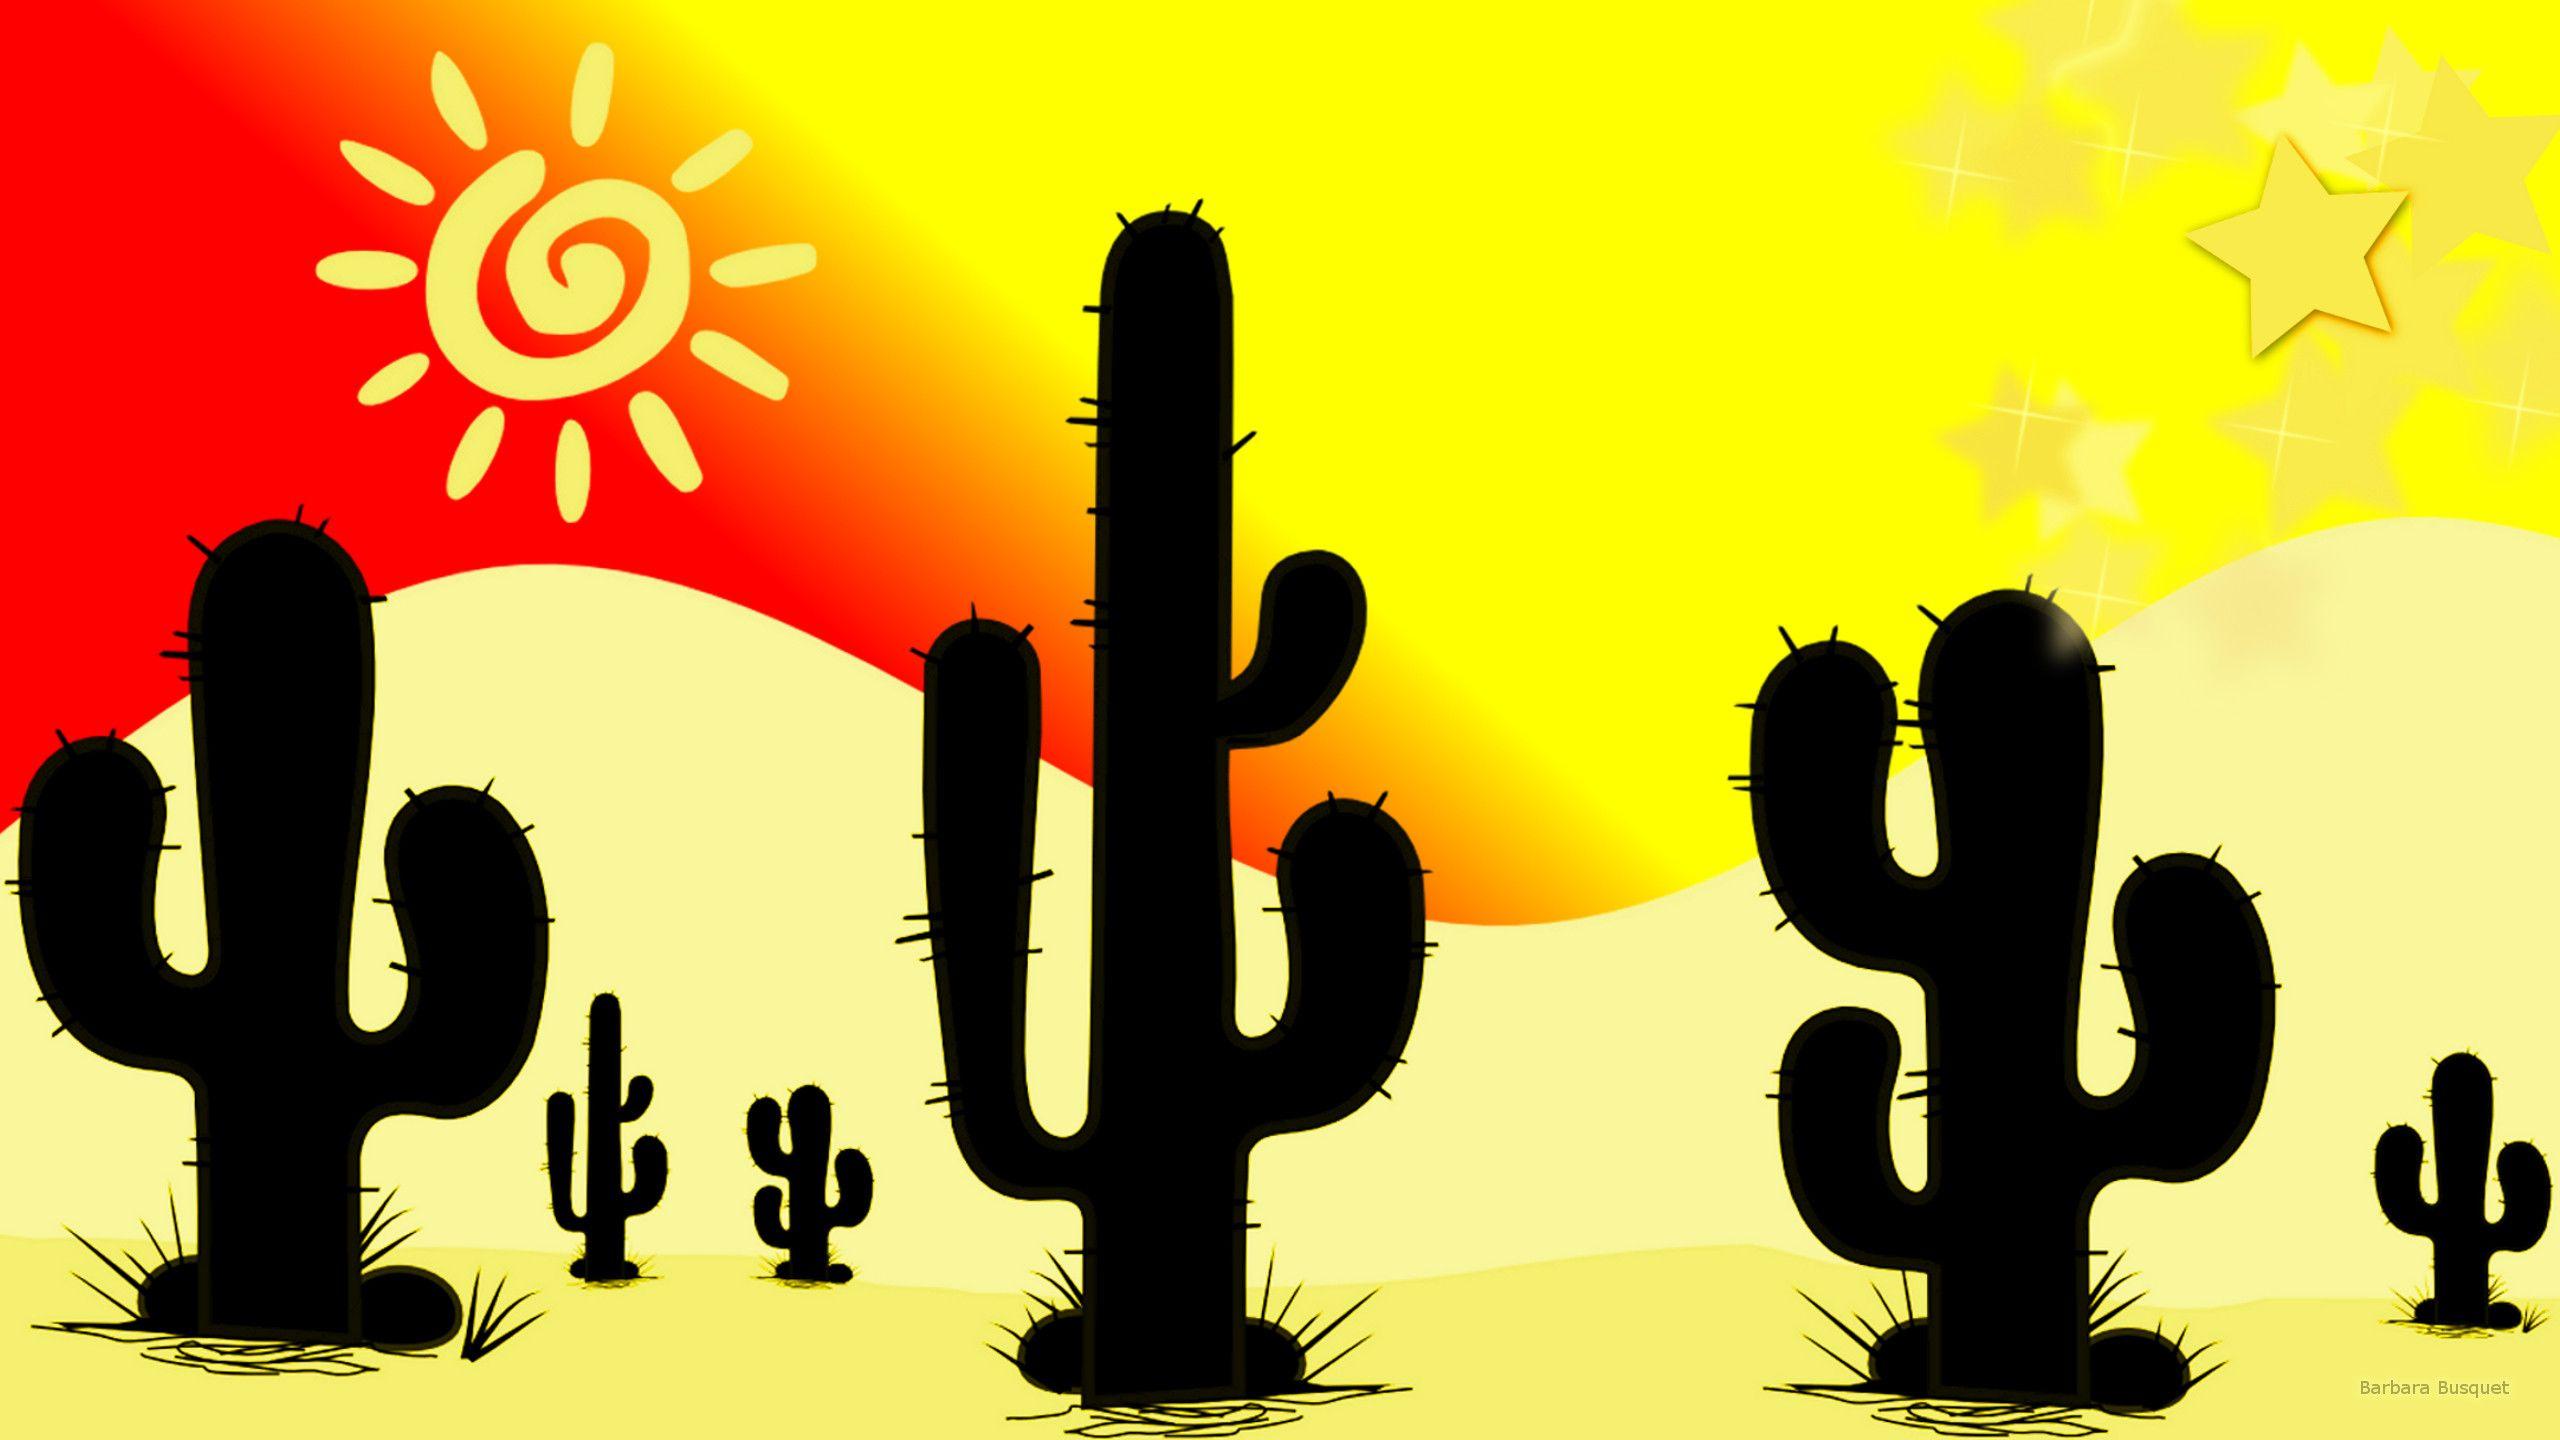 Cacti in the desert HD Wallpaper